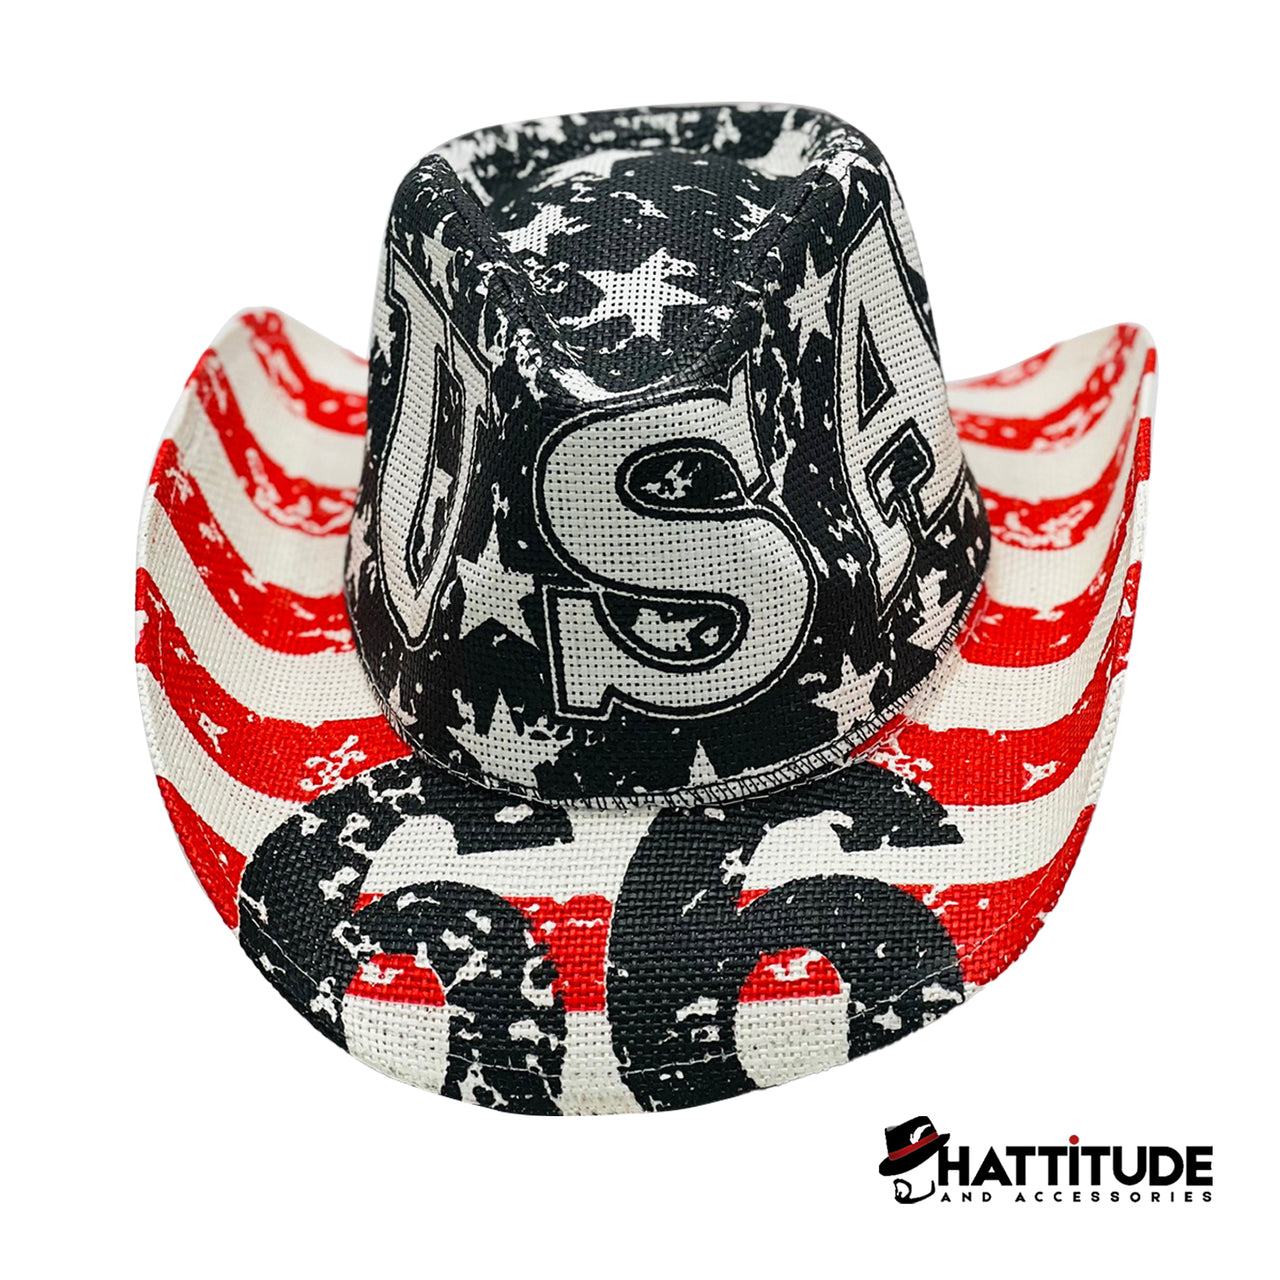 USA - Hattitude